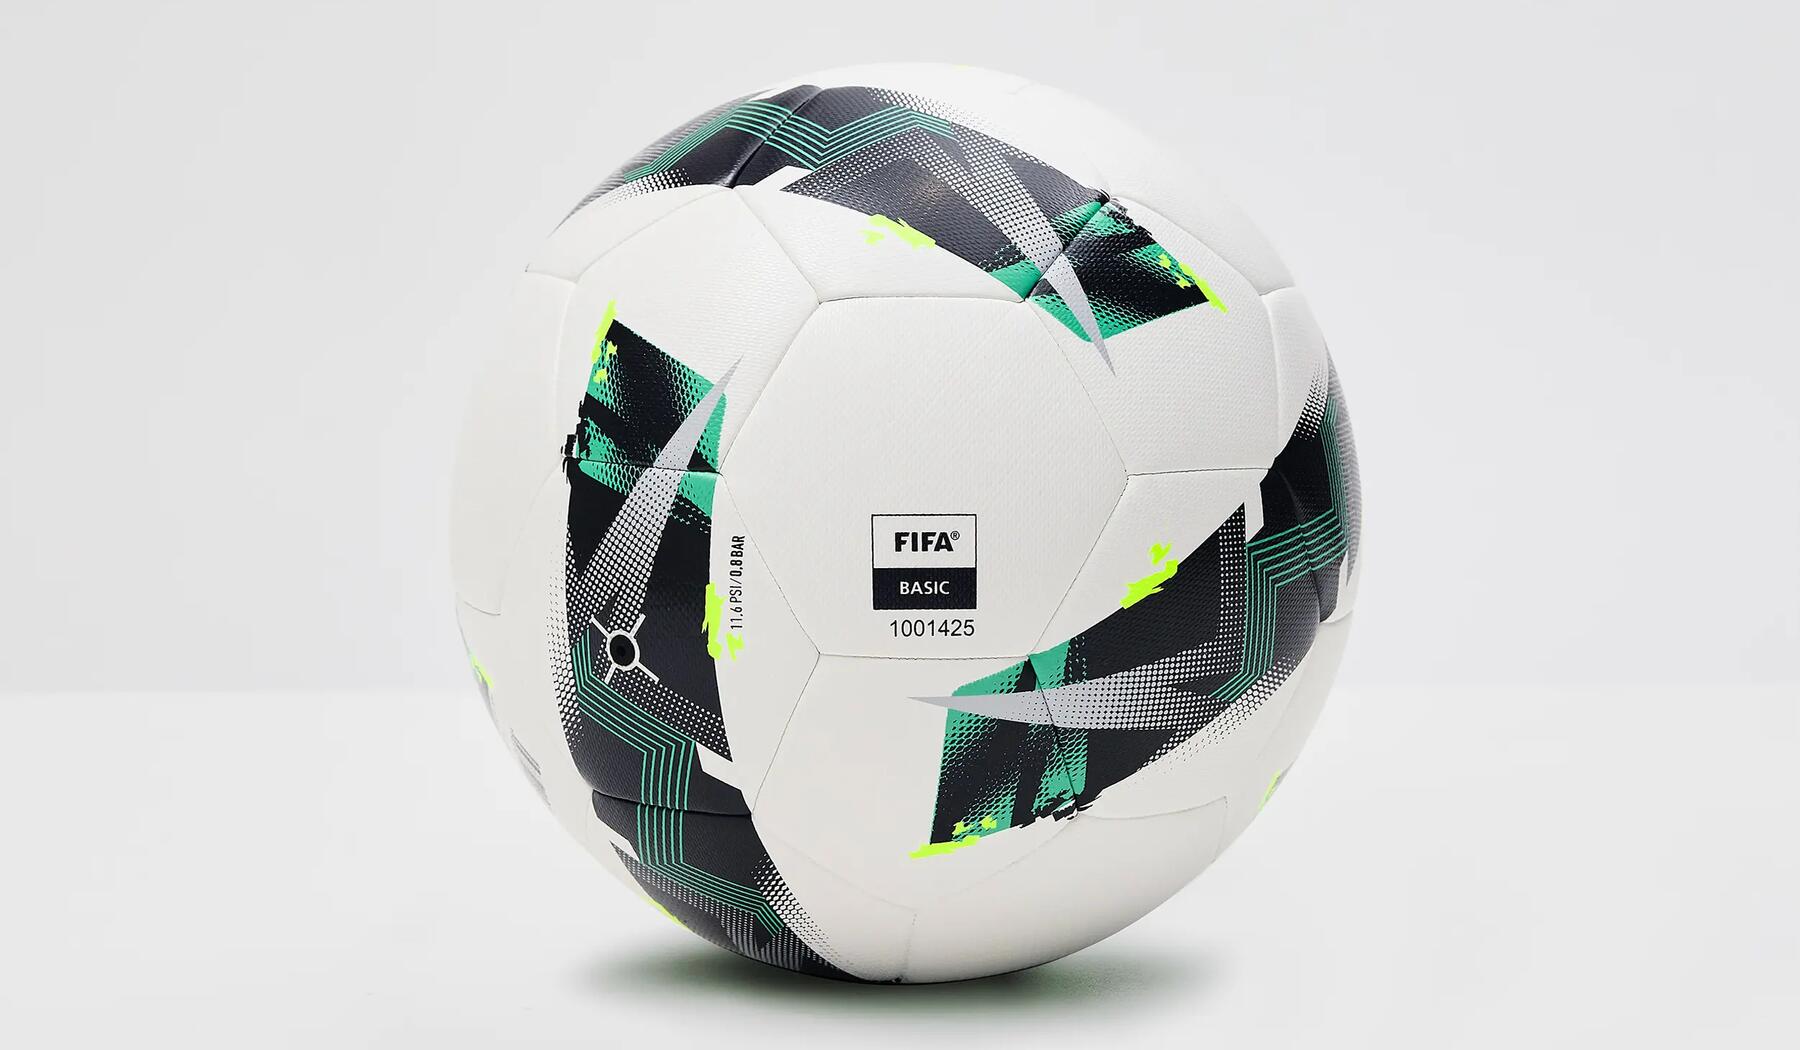 Le ballon replica du Pro League par Kipsta